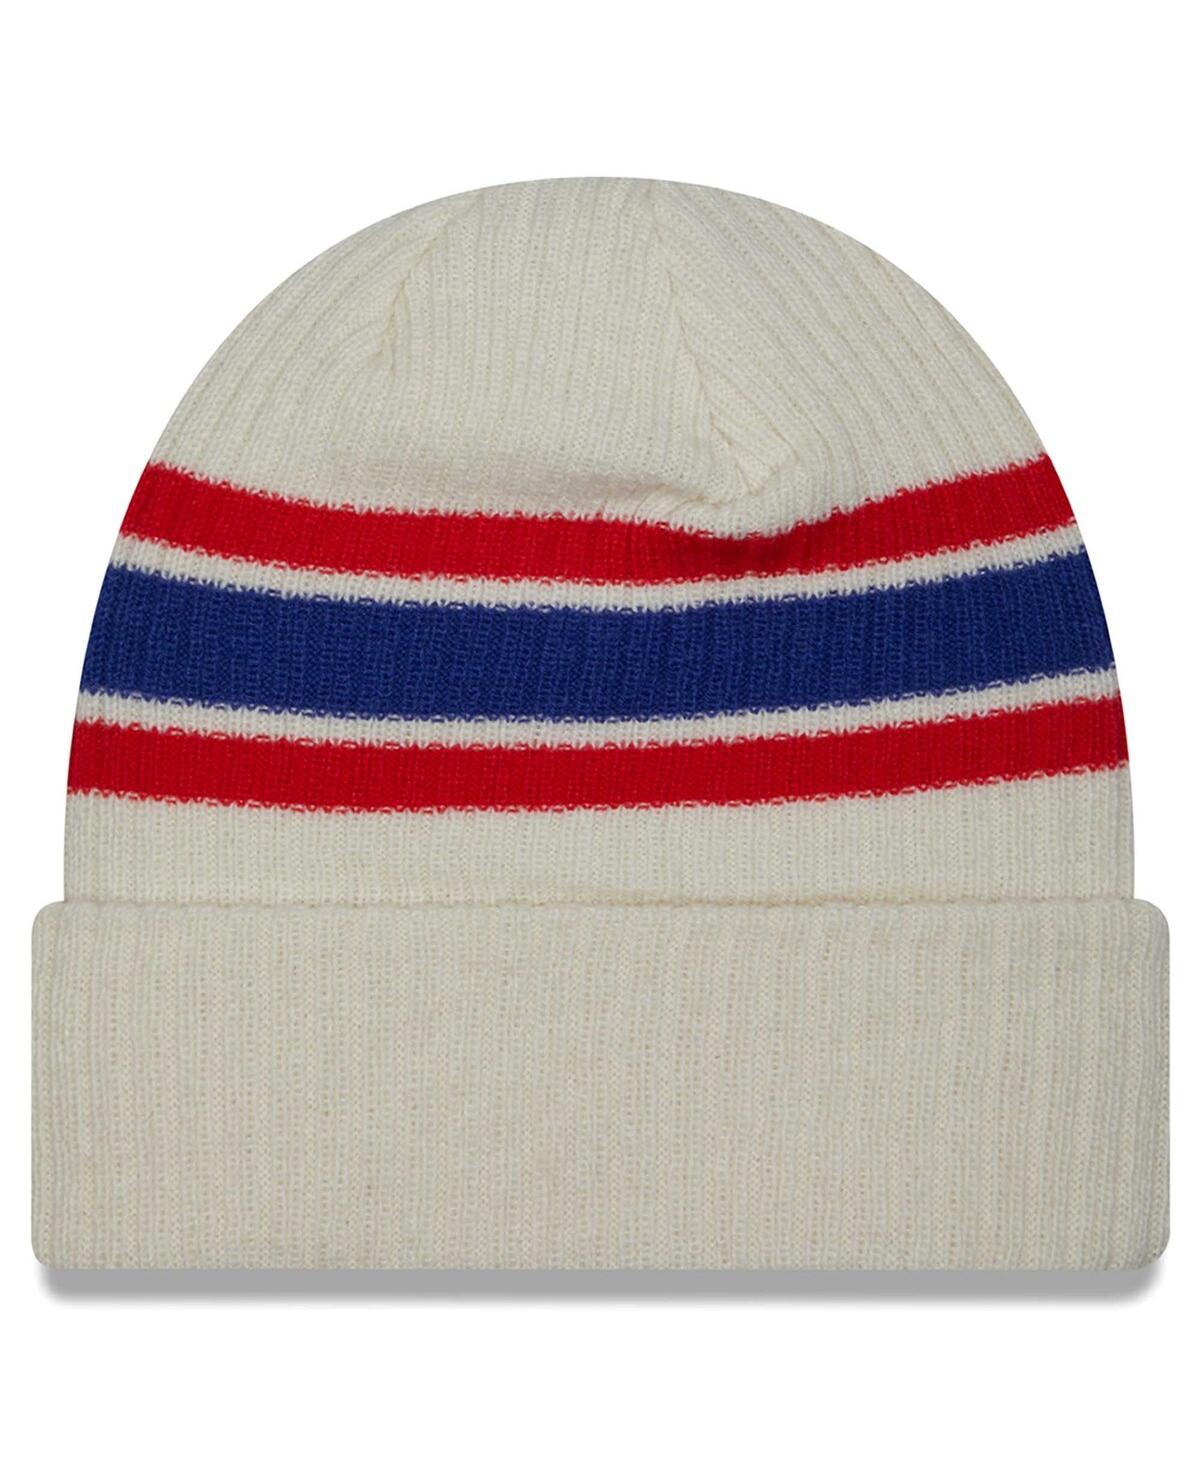 Shop New Era Youth Boys And Girls  White Distressed Buffalo Bills Vintage-like Cuffed Knit Hat